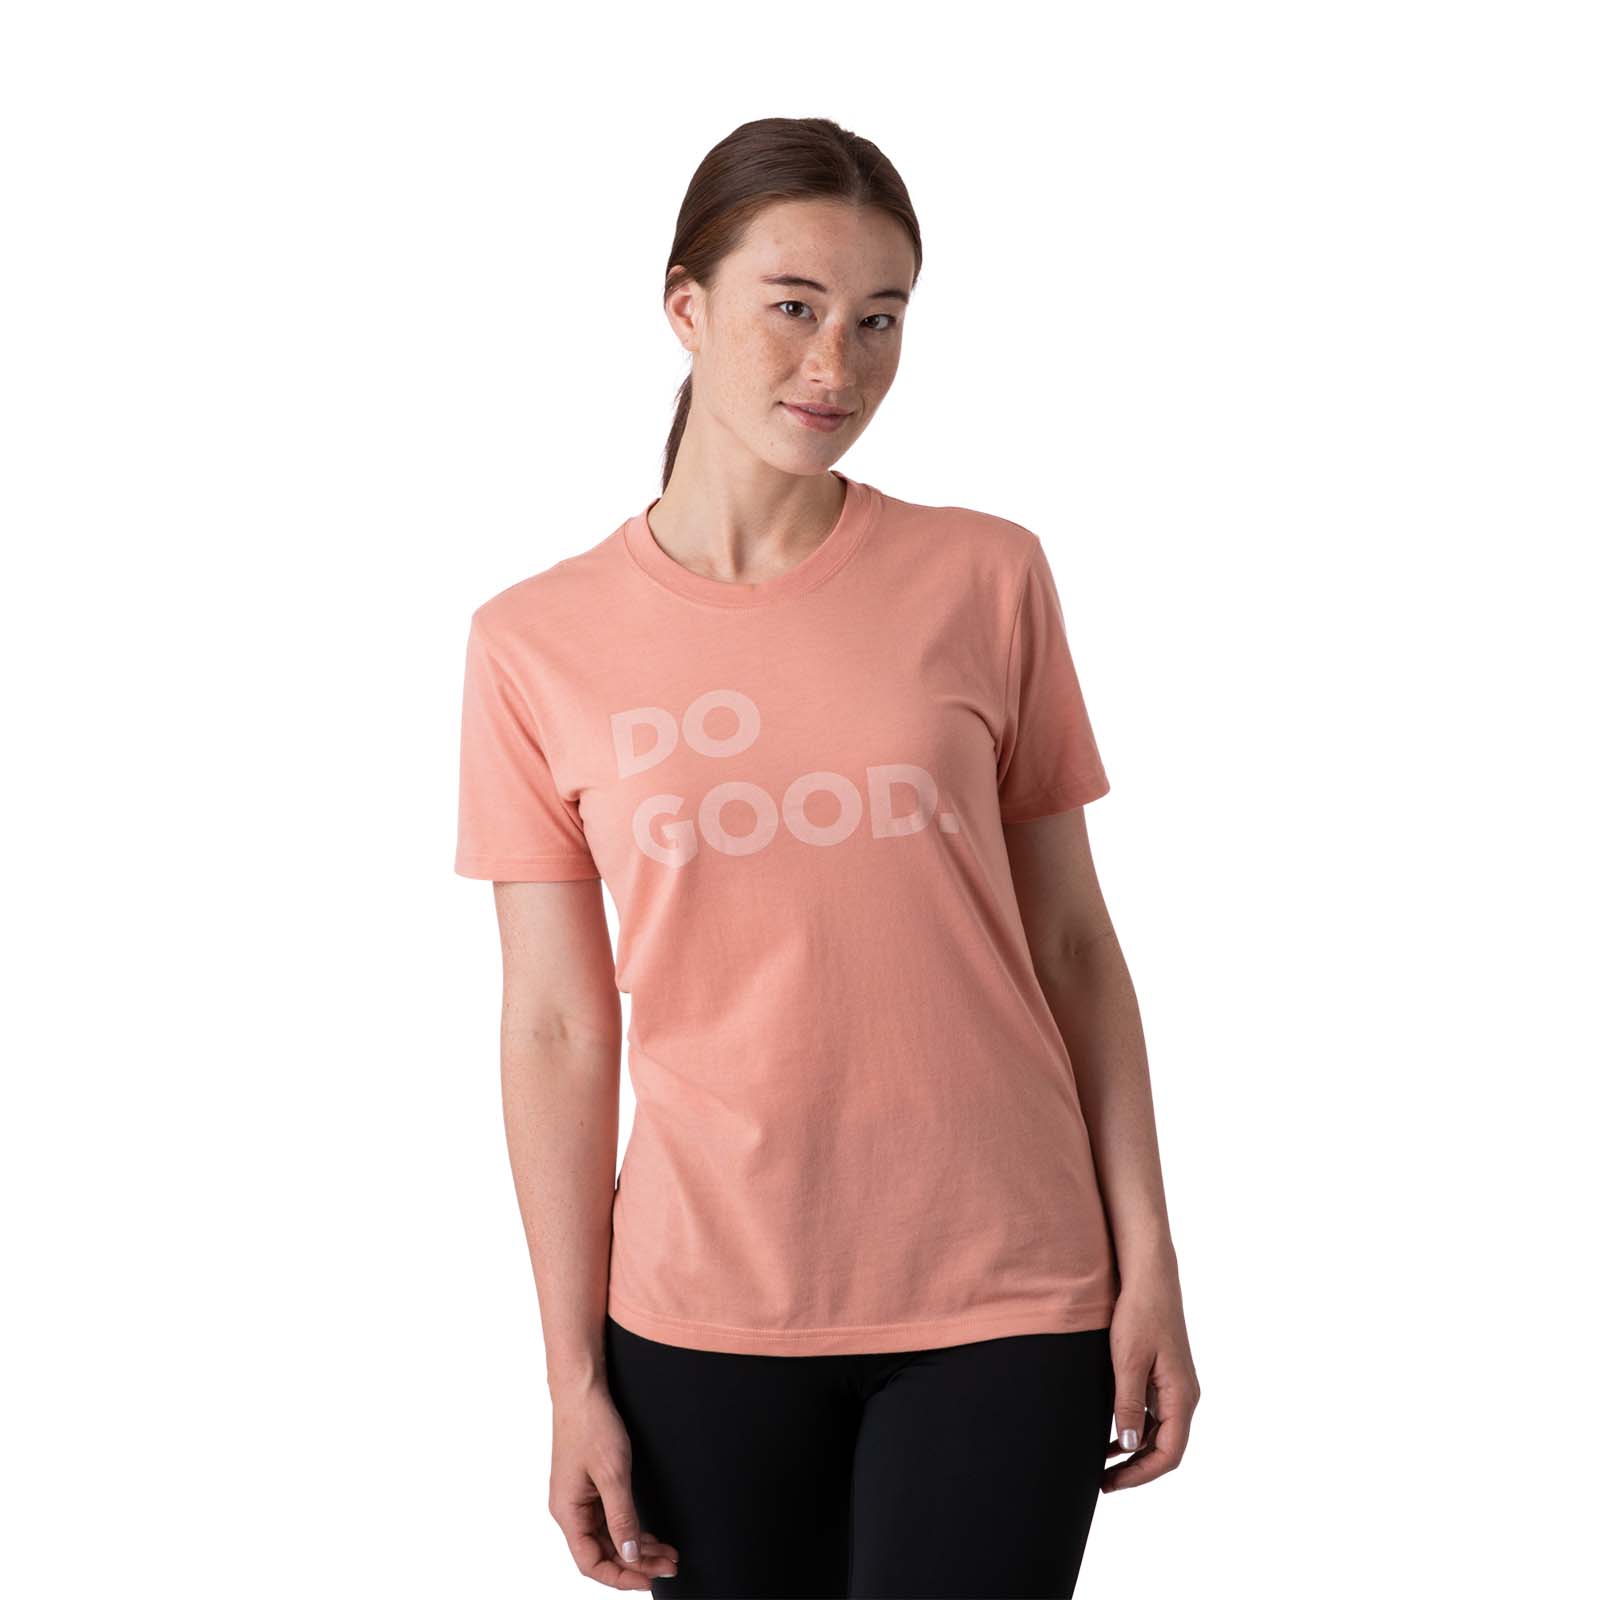 Cotopaxi Do Good - T-shirt - Women's